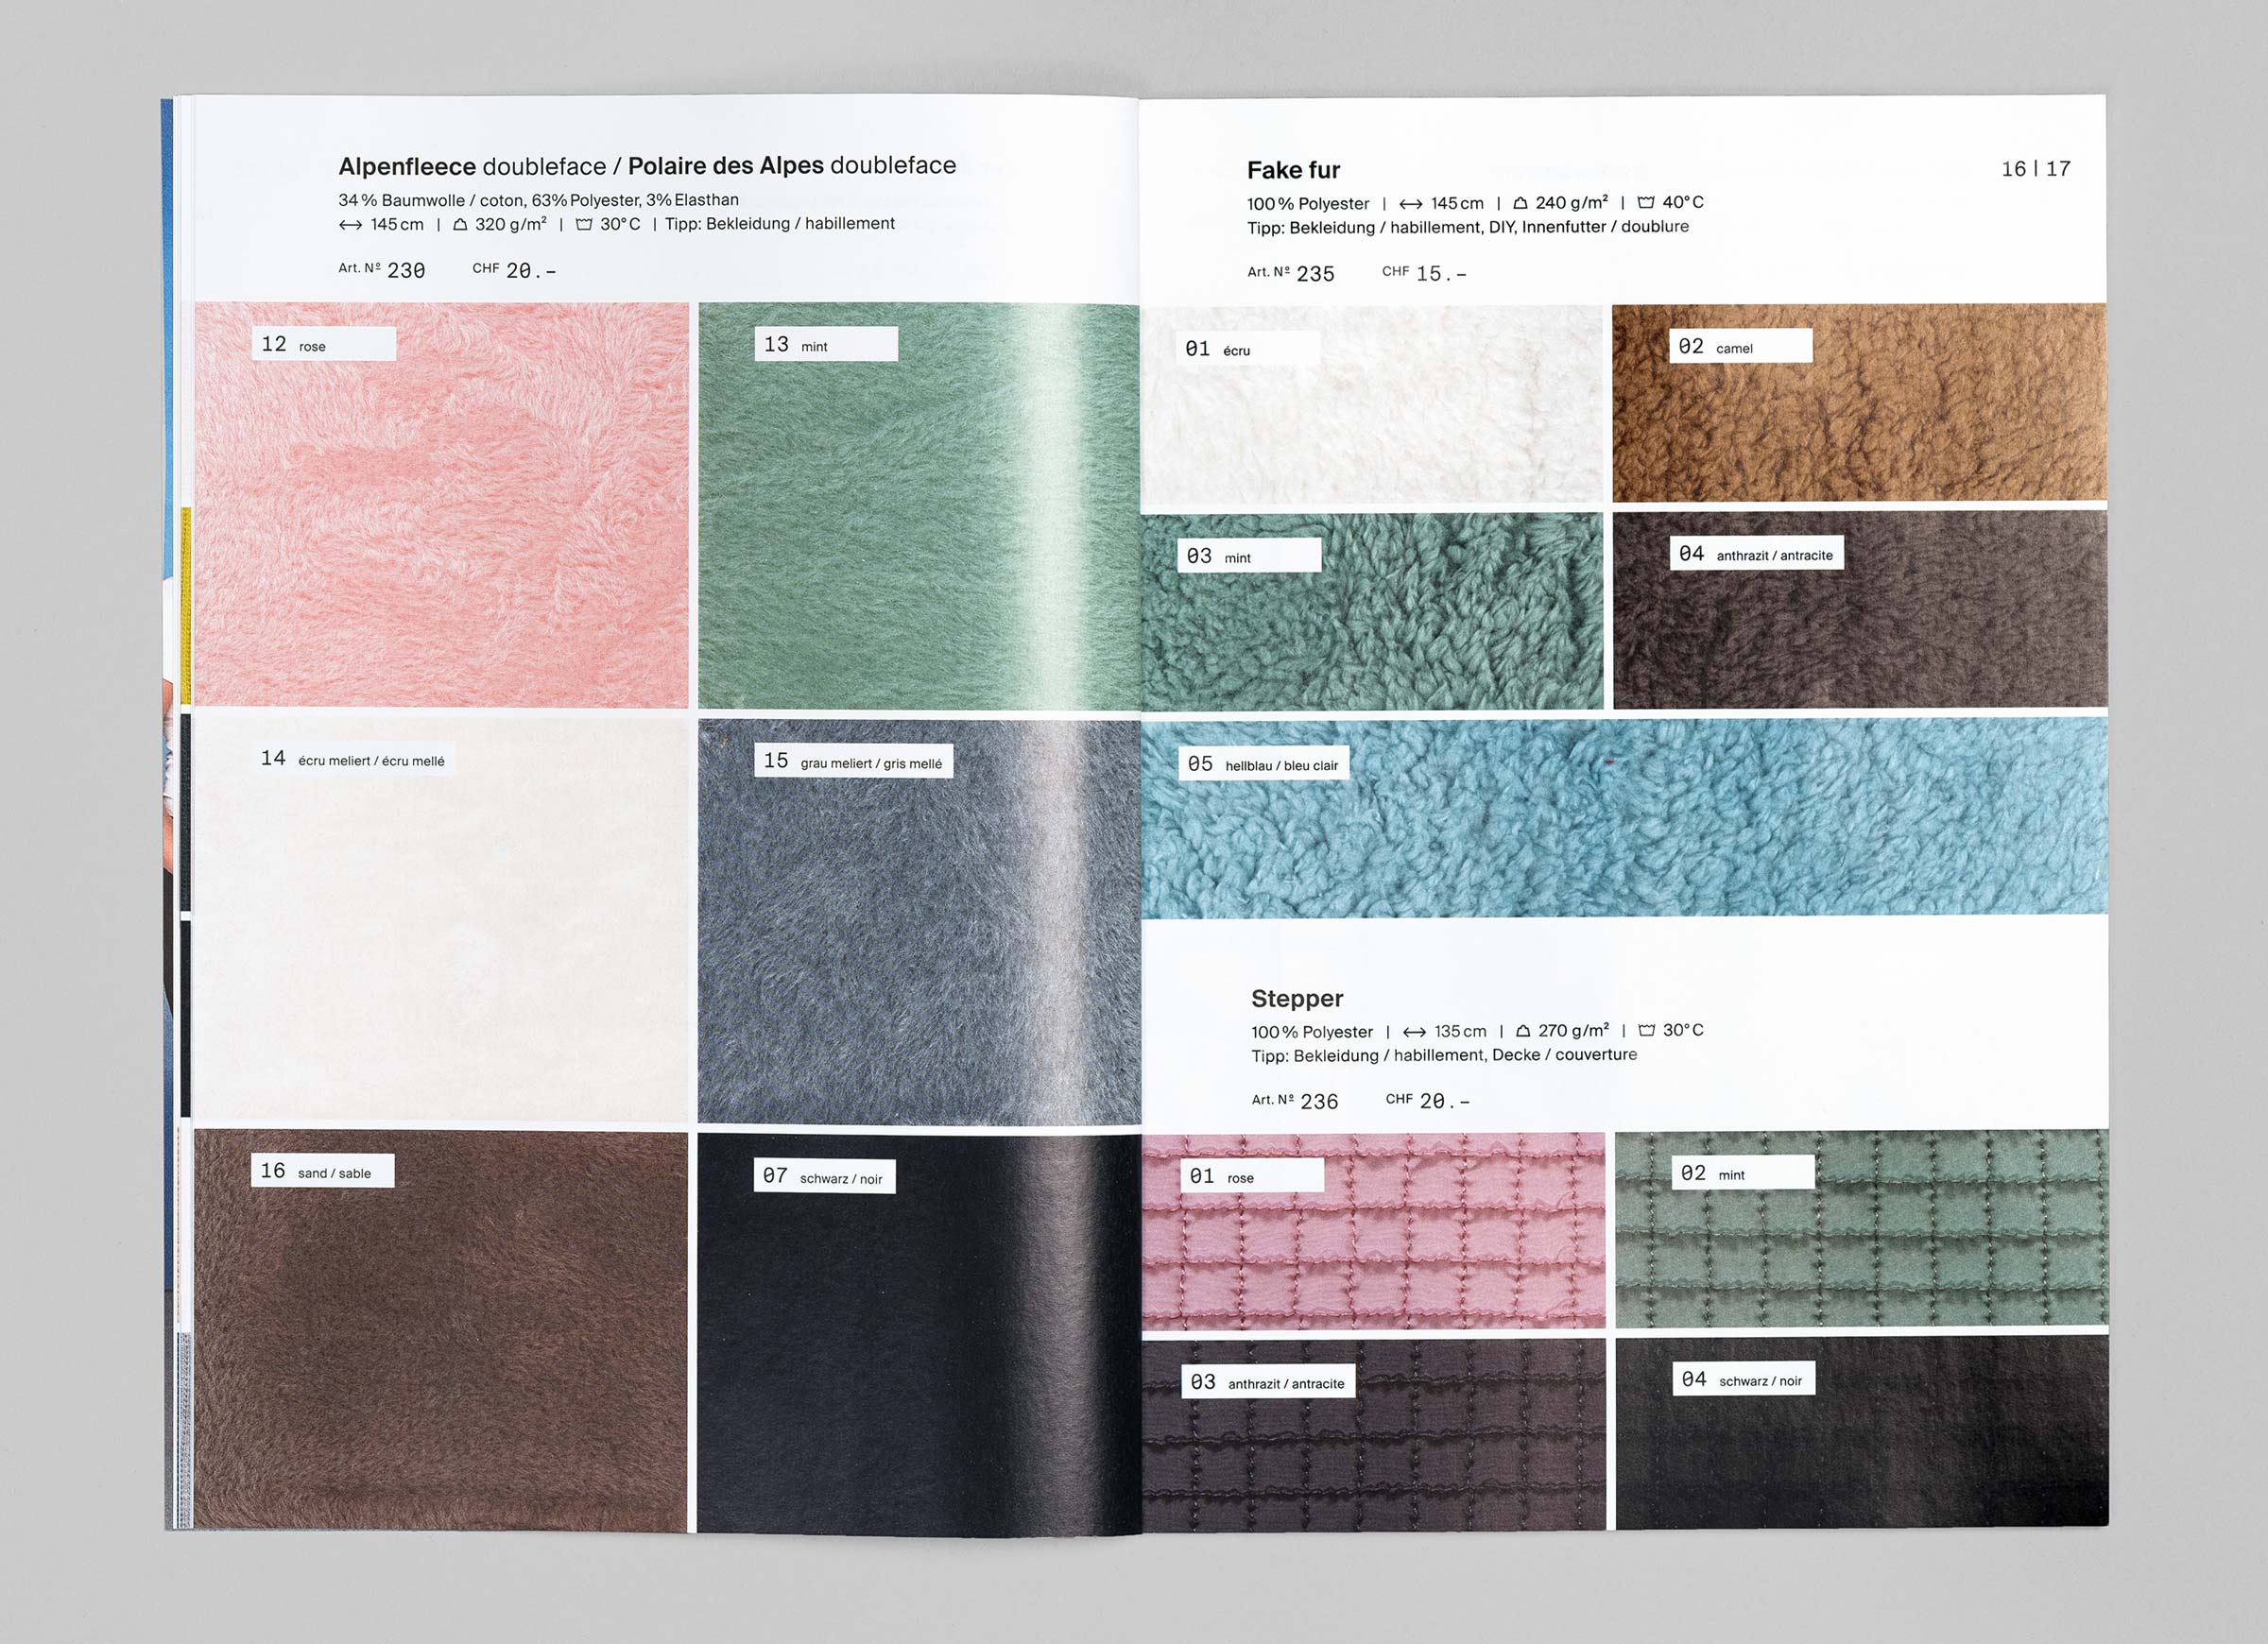 Textil Tricot Vogt – Katalog 2017/18, spreads
©Atelier Pol × Barbara Hess